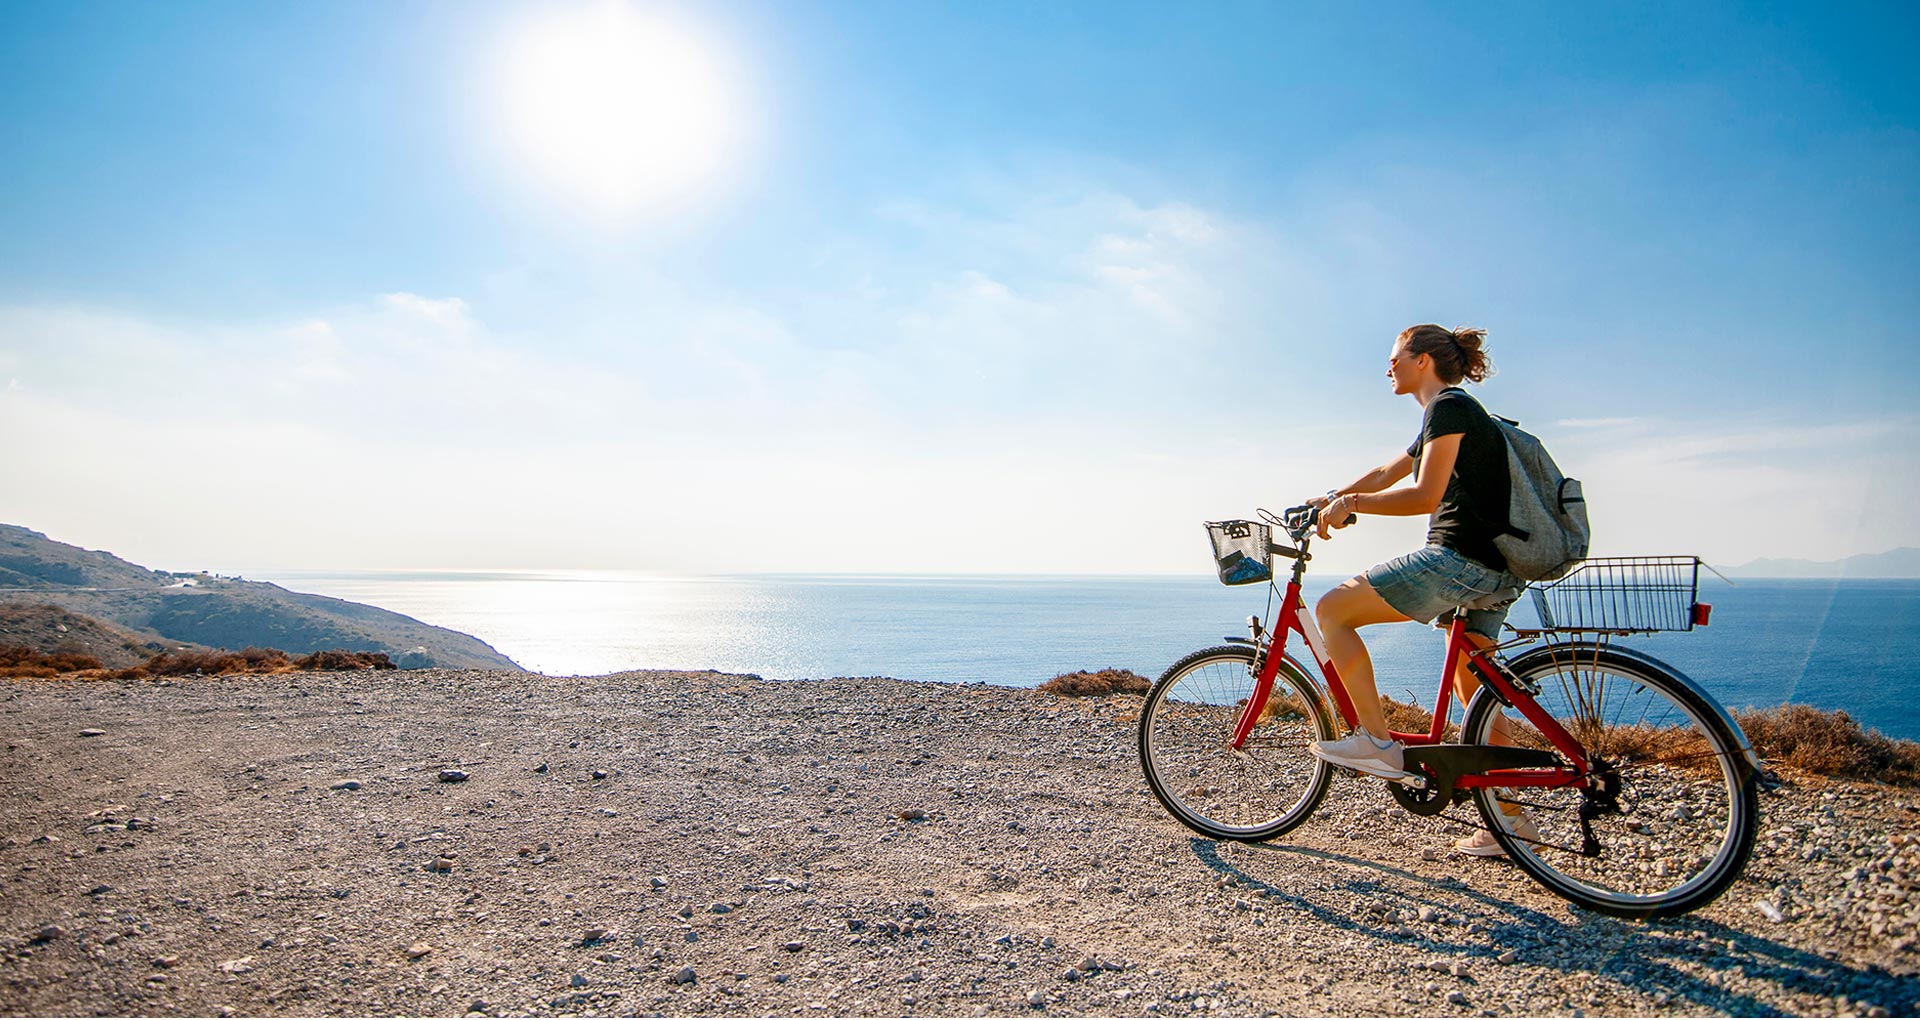 Iemand die aan het fietsen is op het Griekse eiland Kos